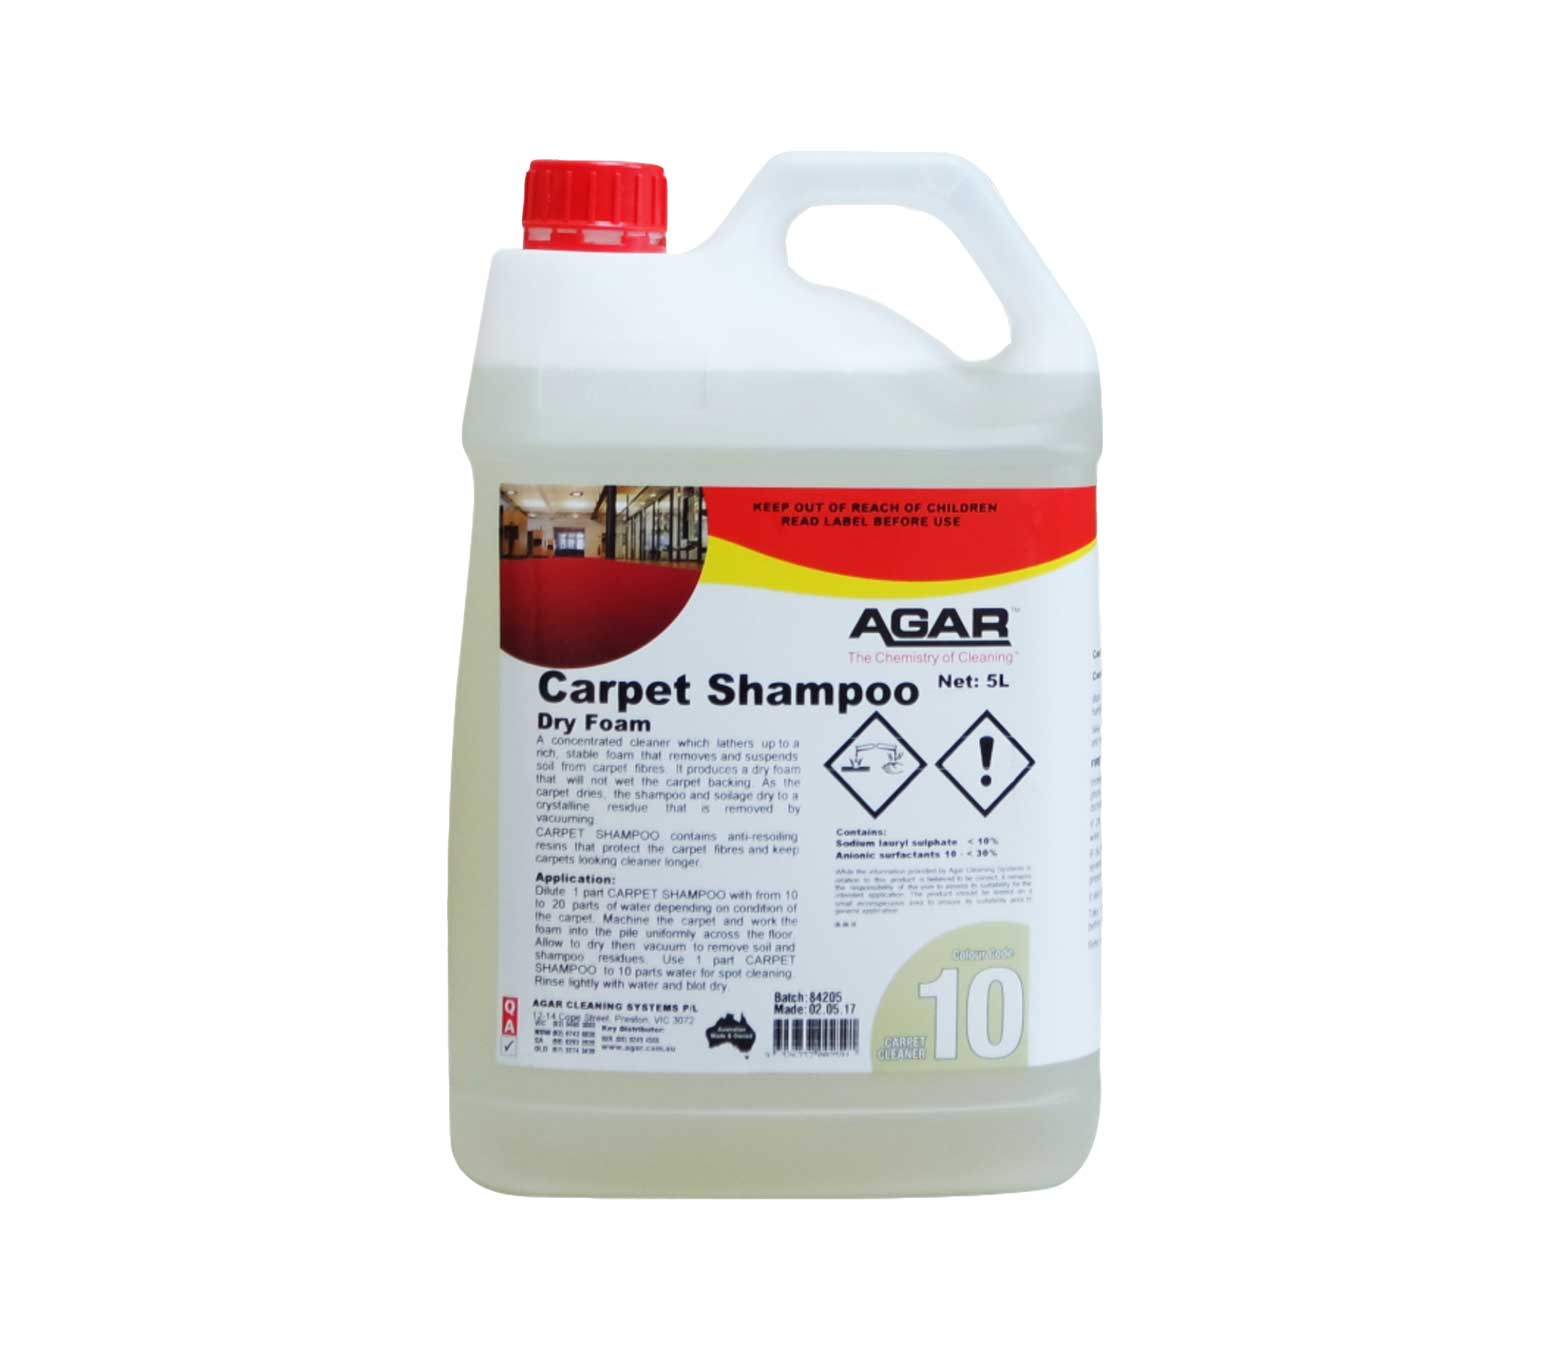 Carpet Shampoo - Dry Foam.